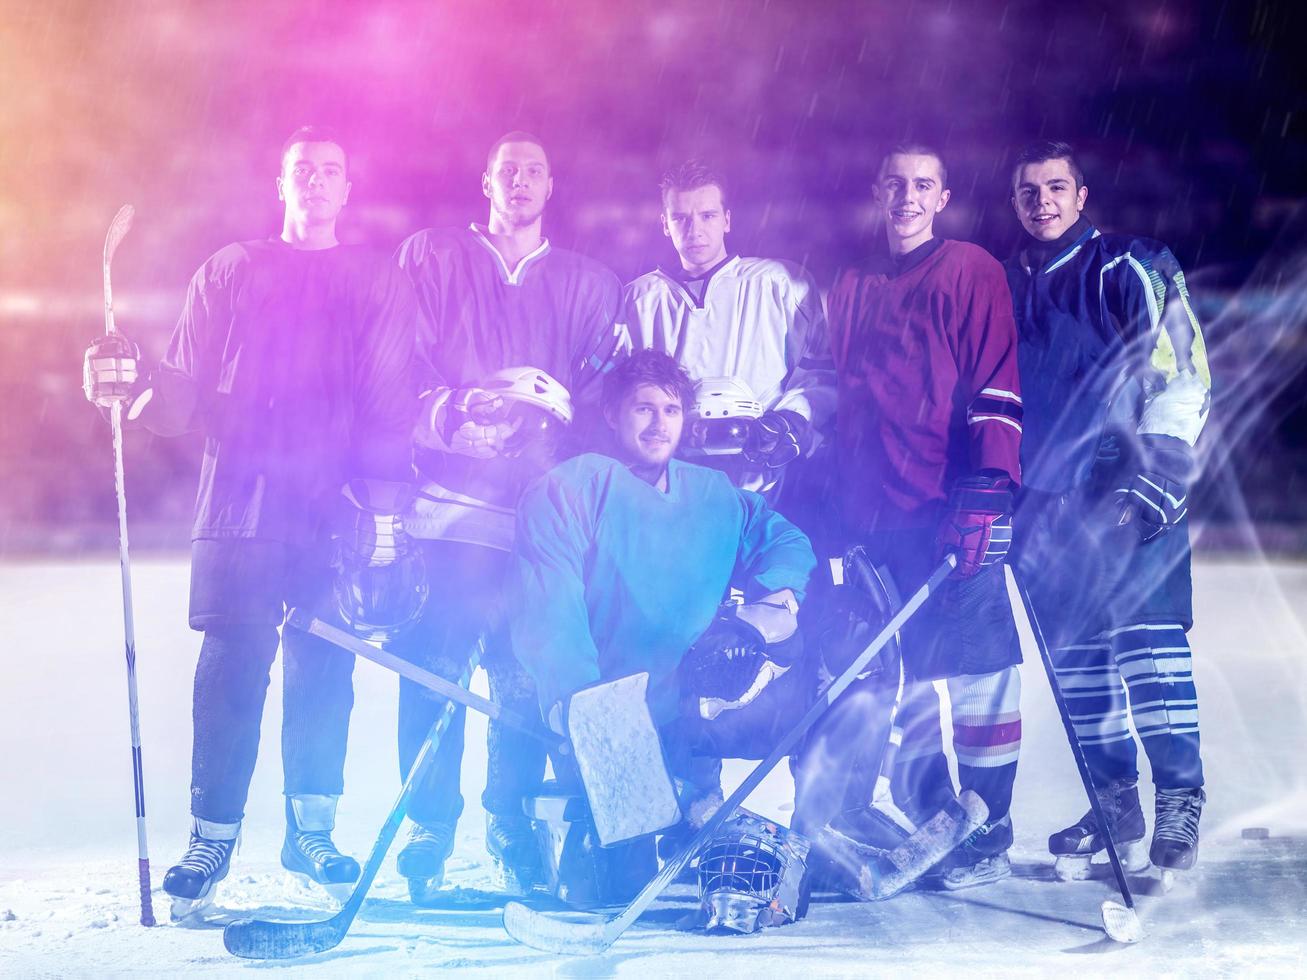 ice hockey players team photo